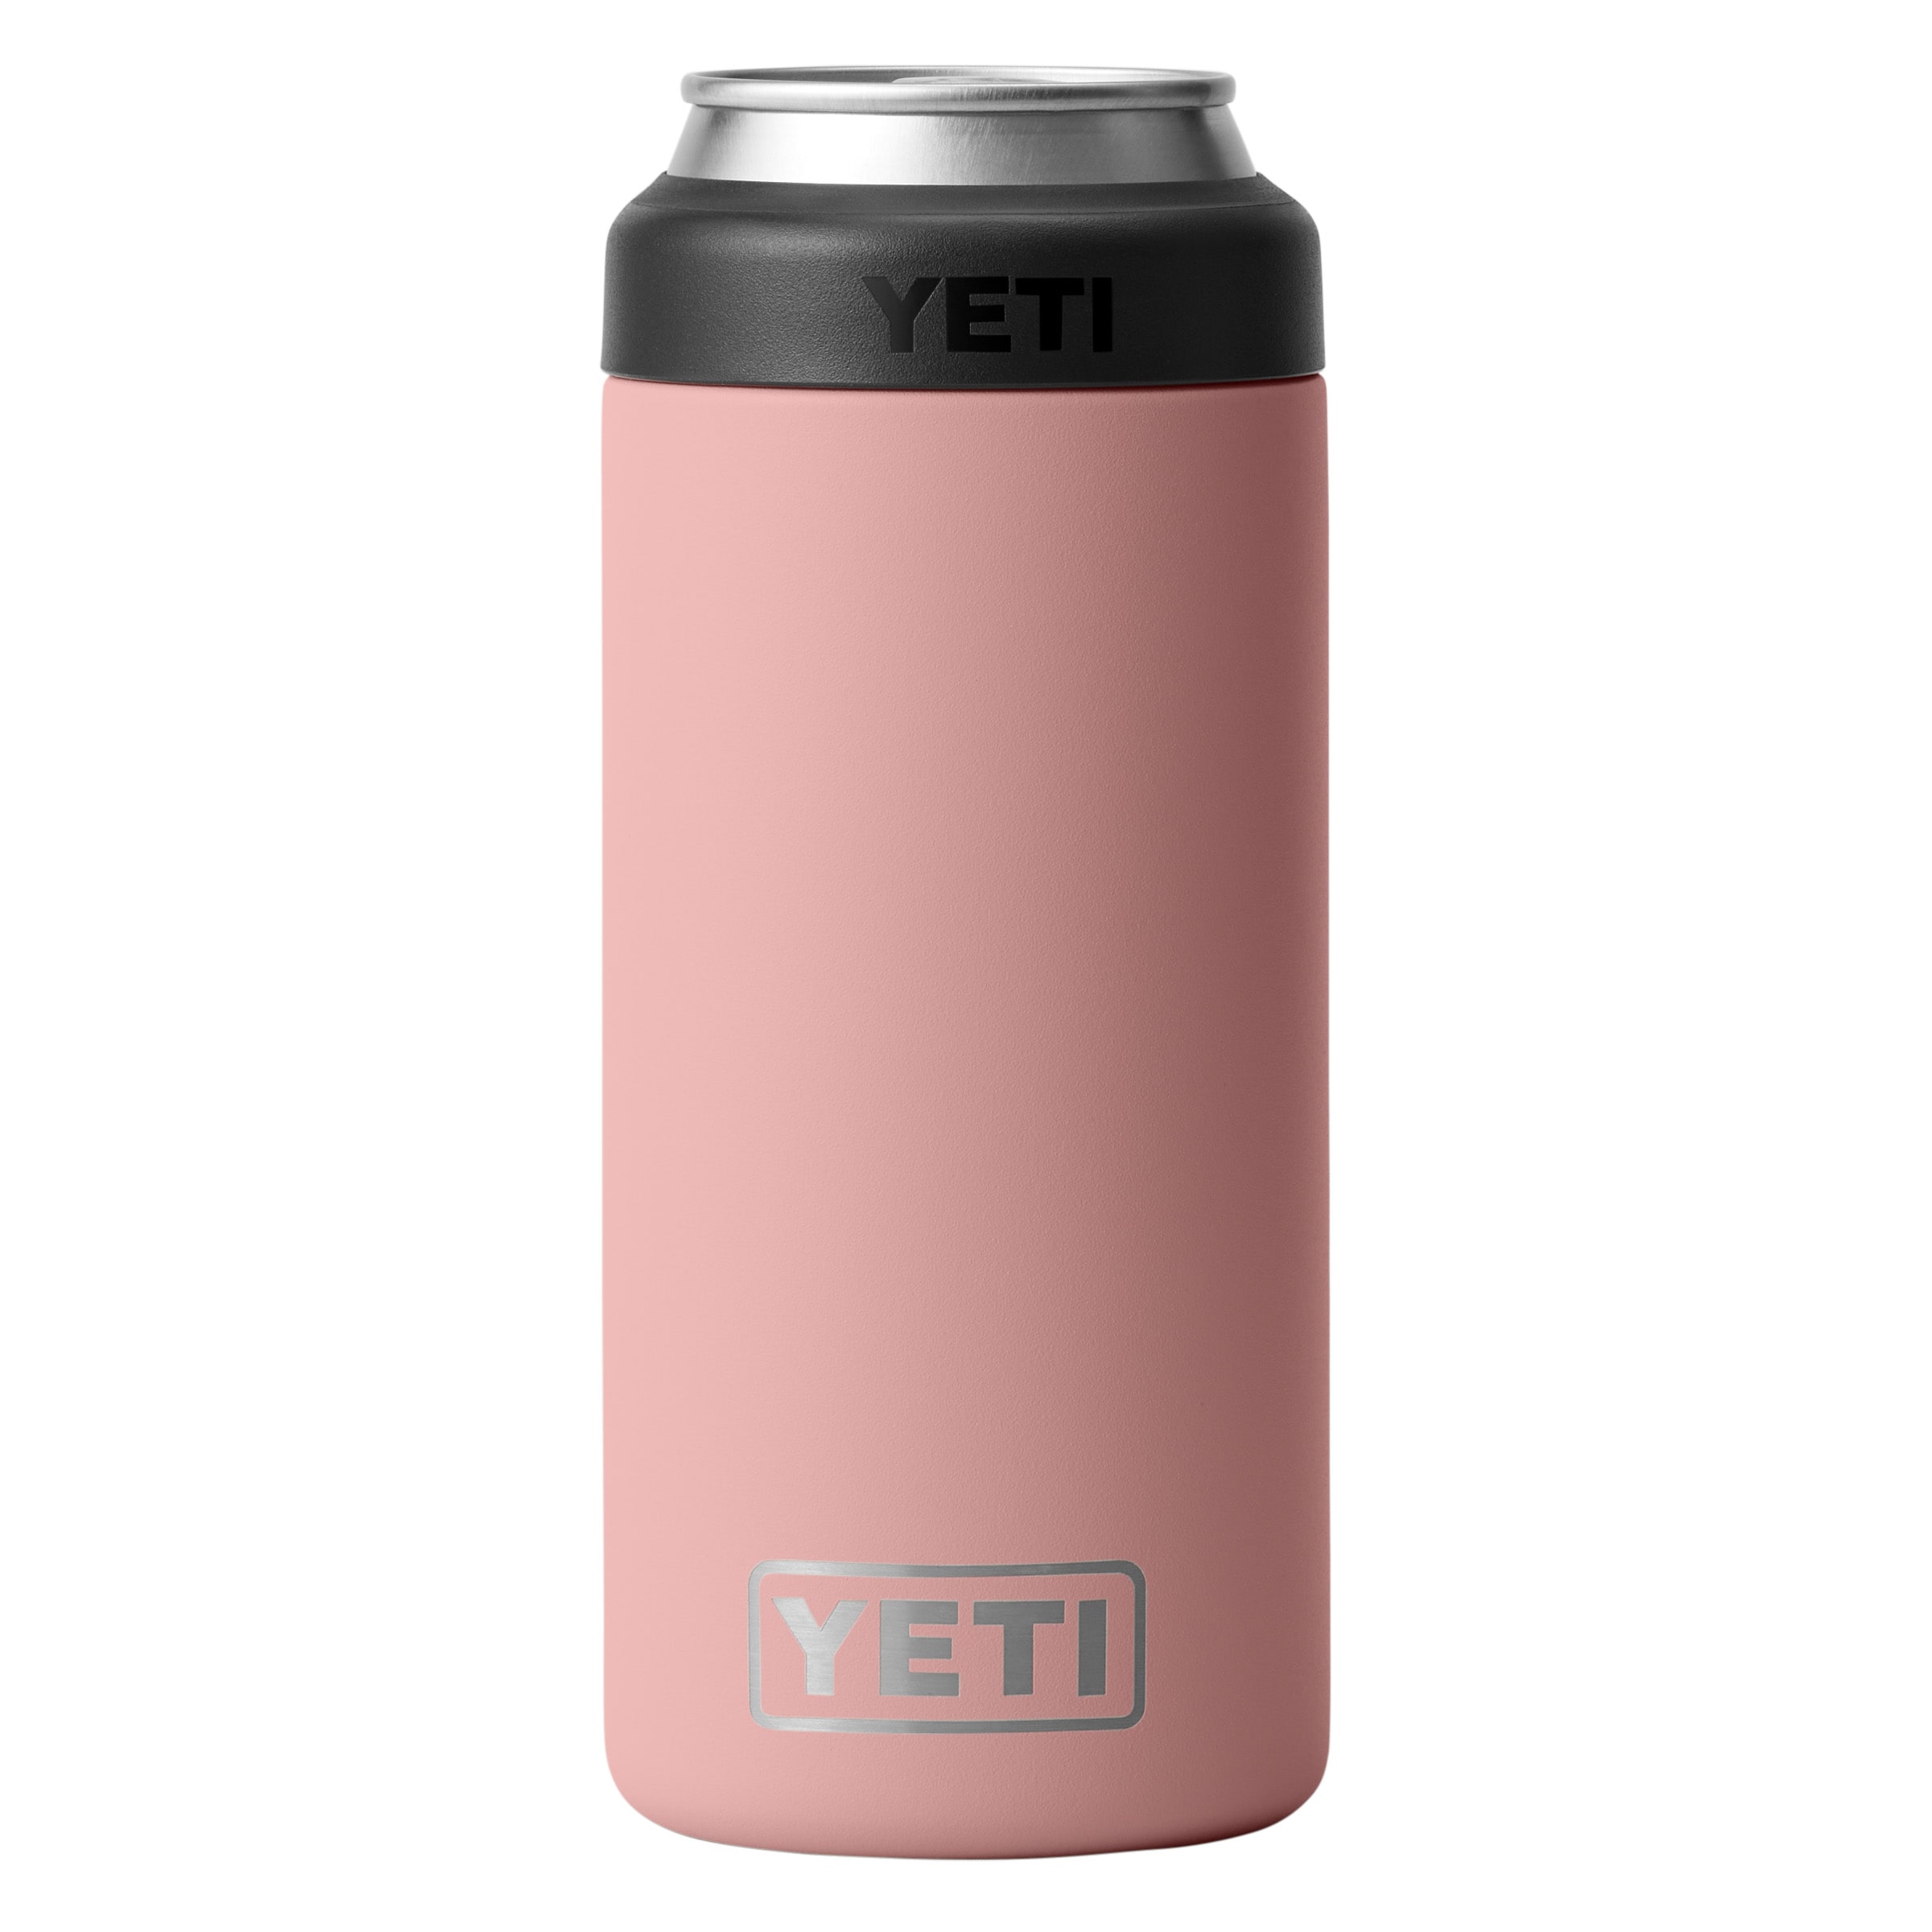 YETI Rambler 12-oz Stainless Steel Colster Slim Can Insulator, Sandstone  Pink at